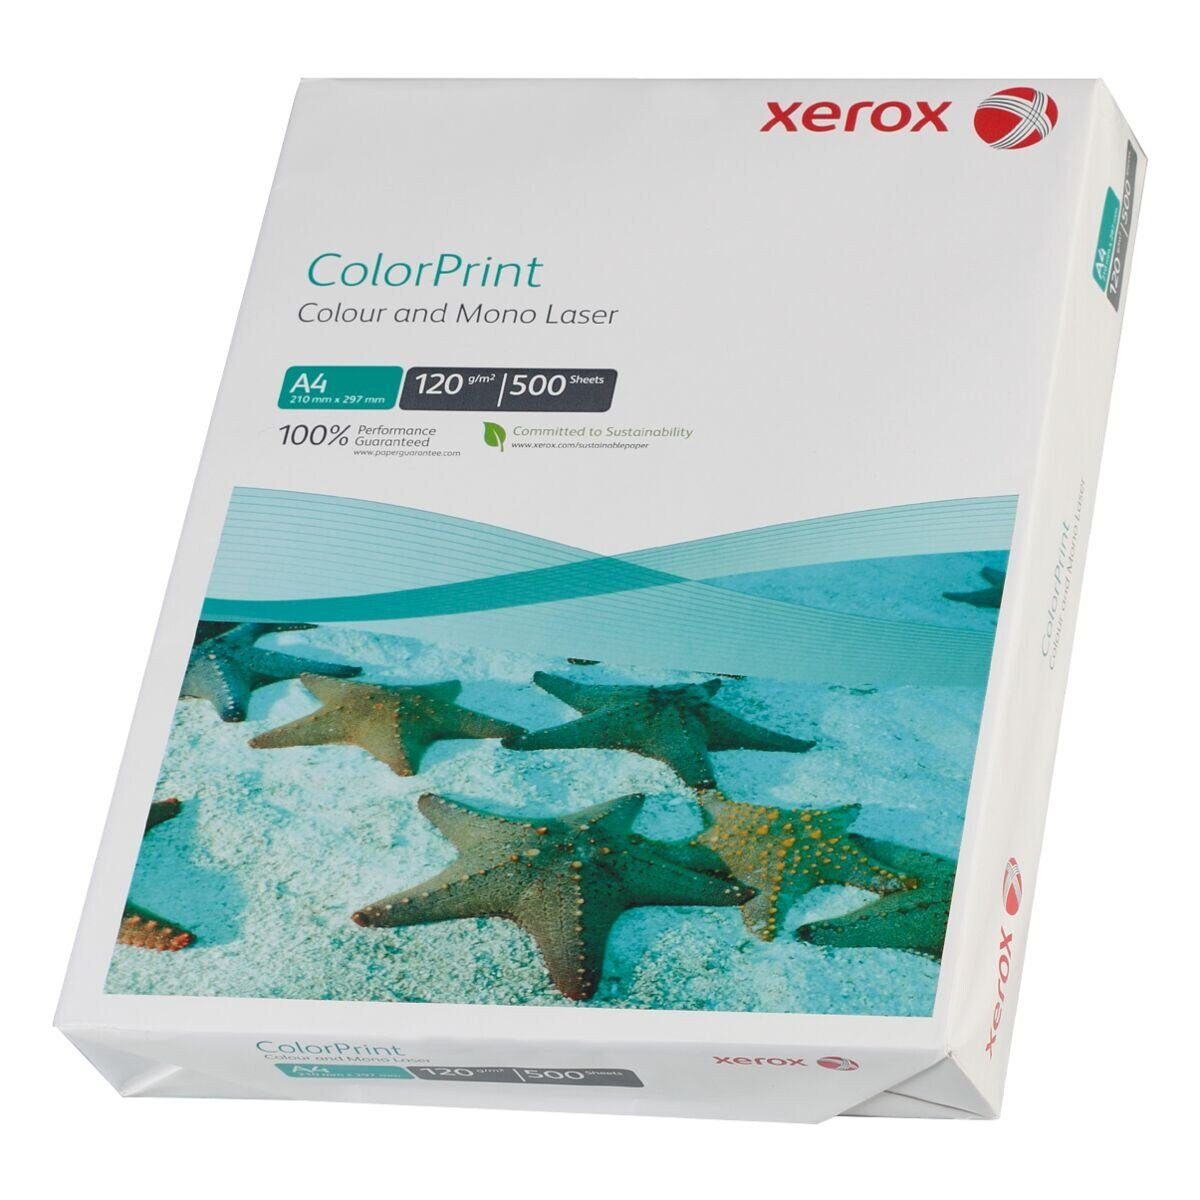 g/m², Blatt 120 Format 171 Xerox DIN ColorPrint, 500 CIE, A4, Farblaser-Druckerpapier